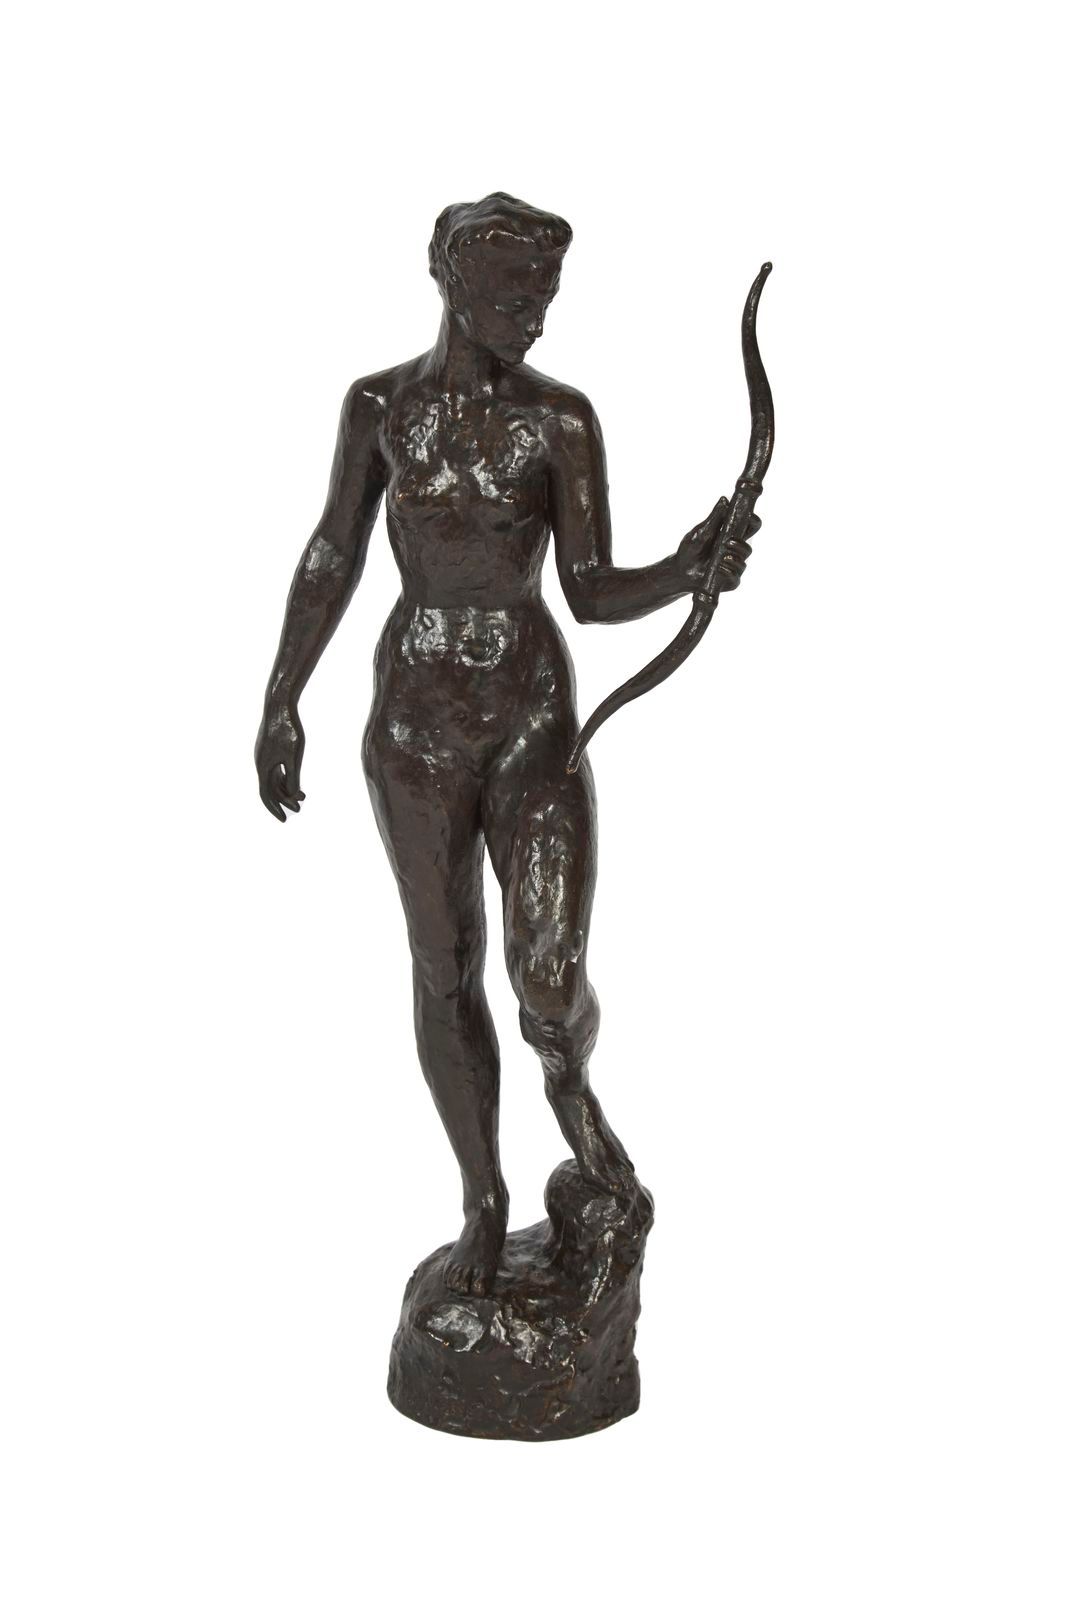 192 Hubert YENCESSE (1900-1987) 
Diane chasseresse 
Sculpture en bronze à patine&hellip;